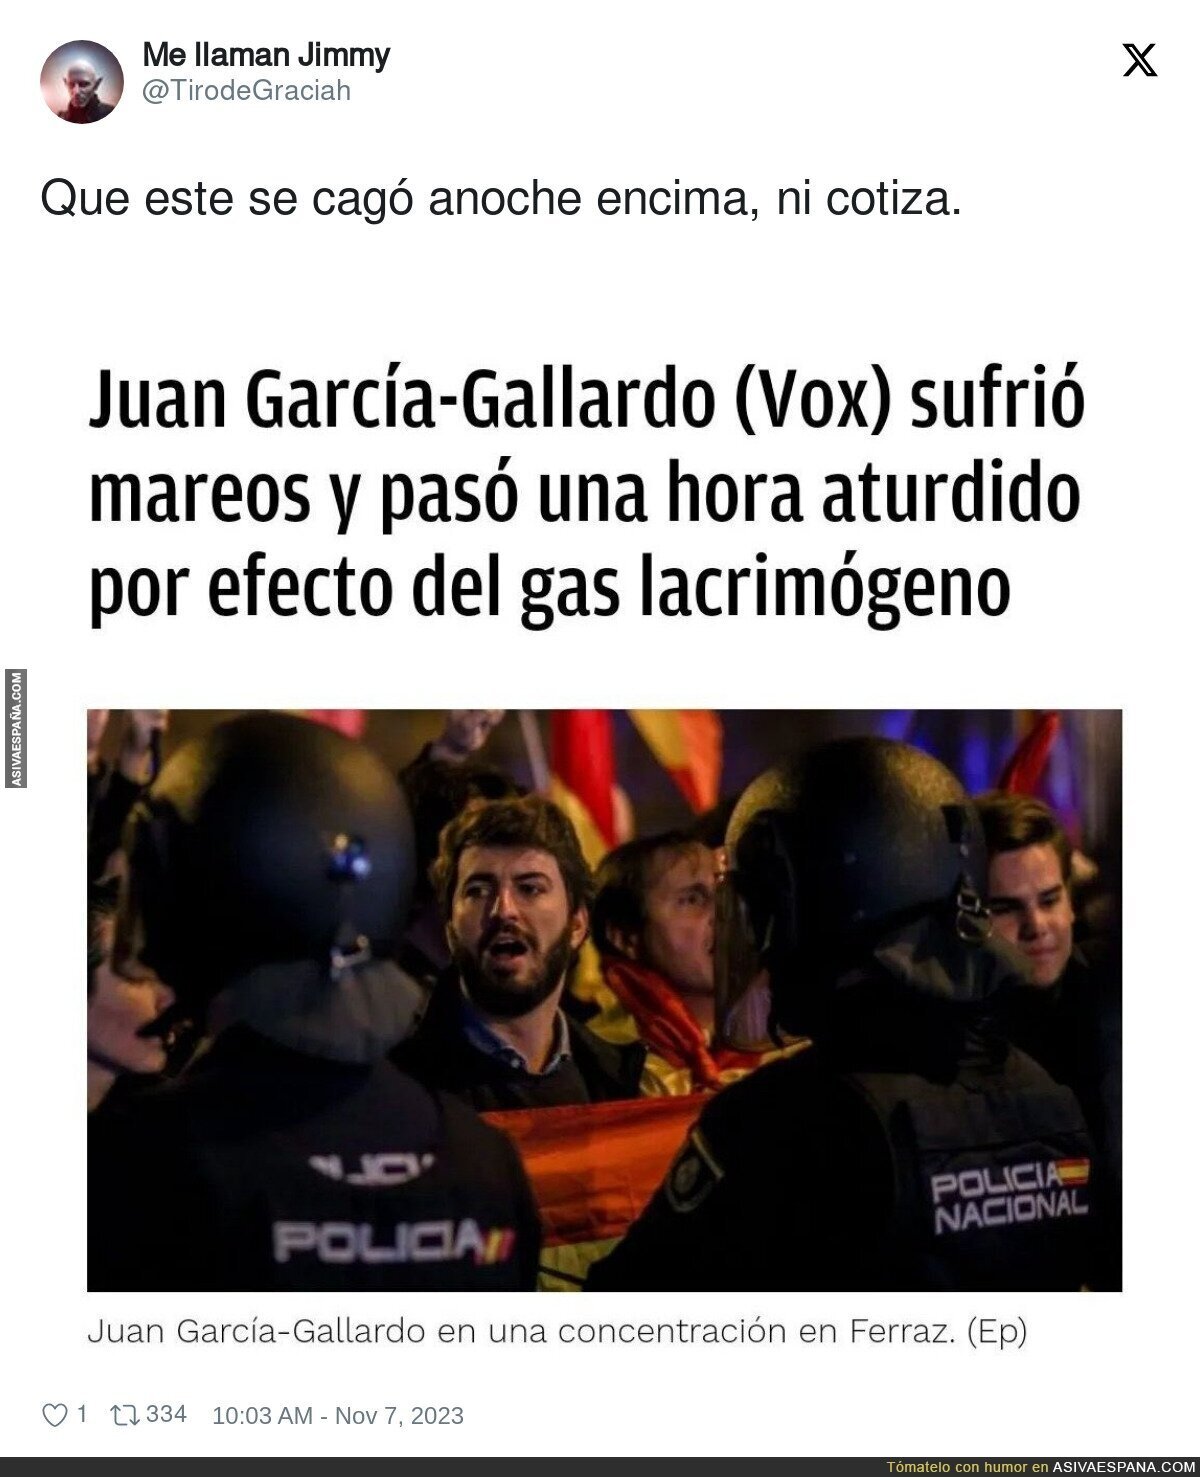 Vaya noche pasó Juan García-Gallardo